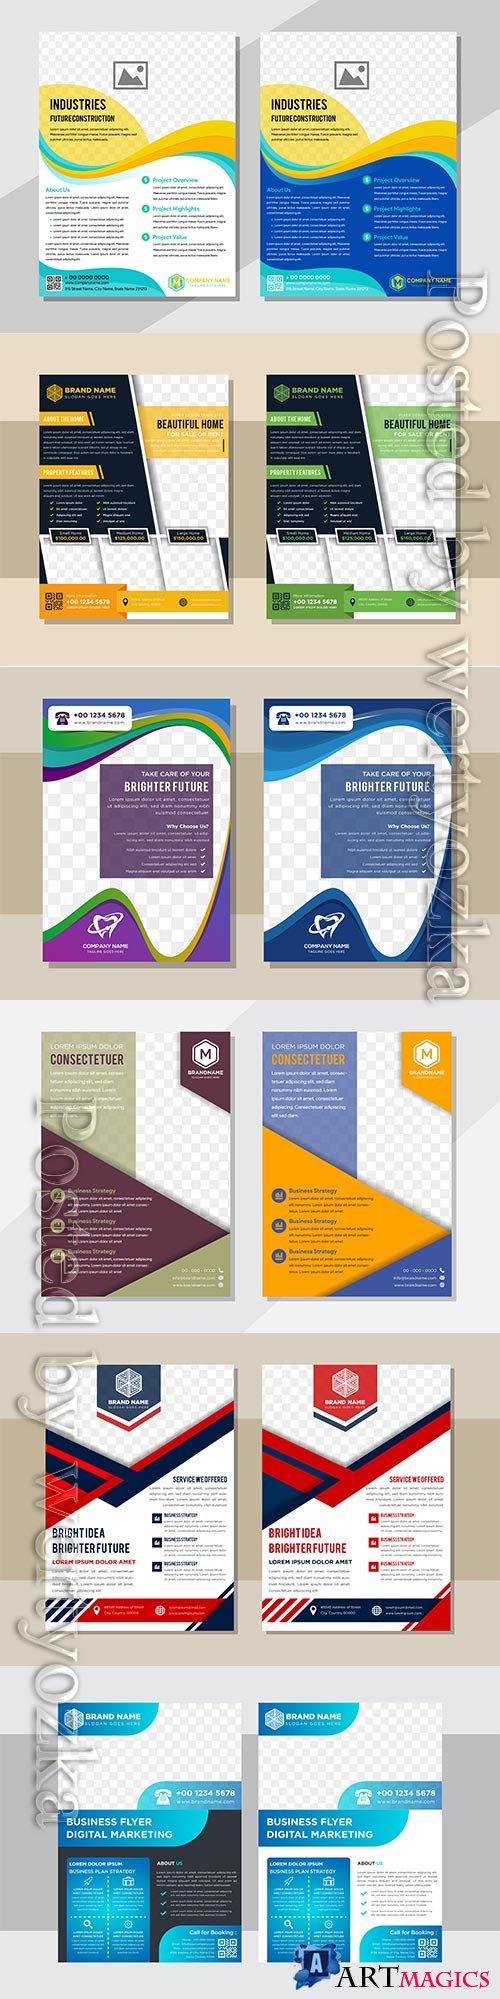 Business flyer template design, brochure vector illustration # 2